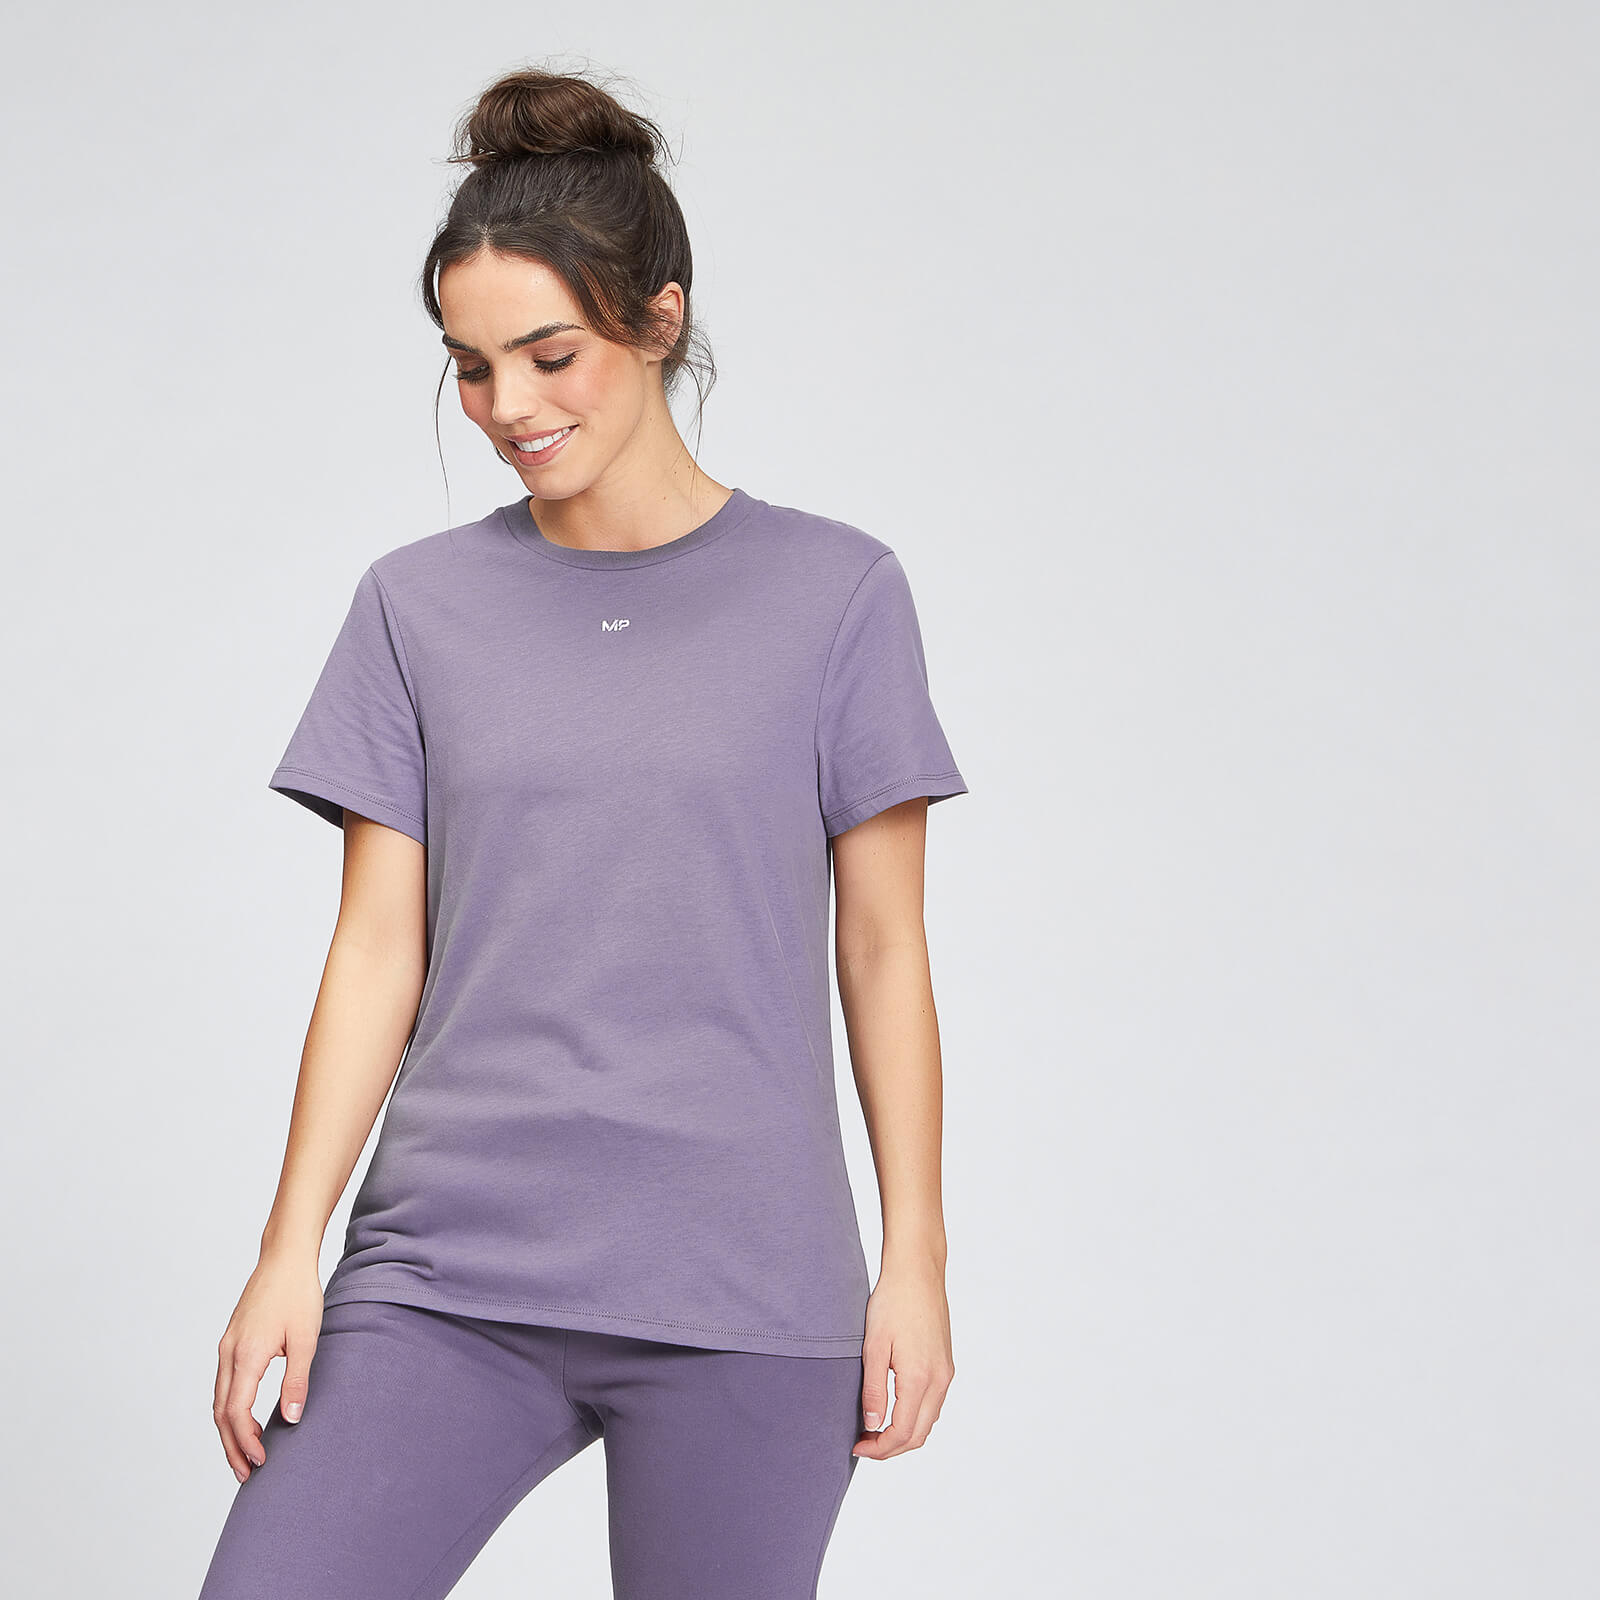 MP Women's T-Shirt - Smokey Purple - XXS